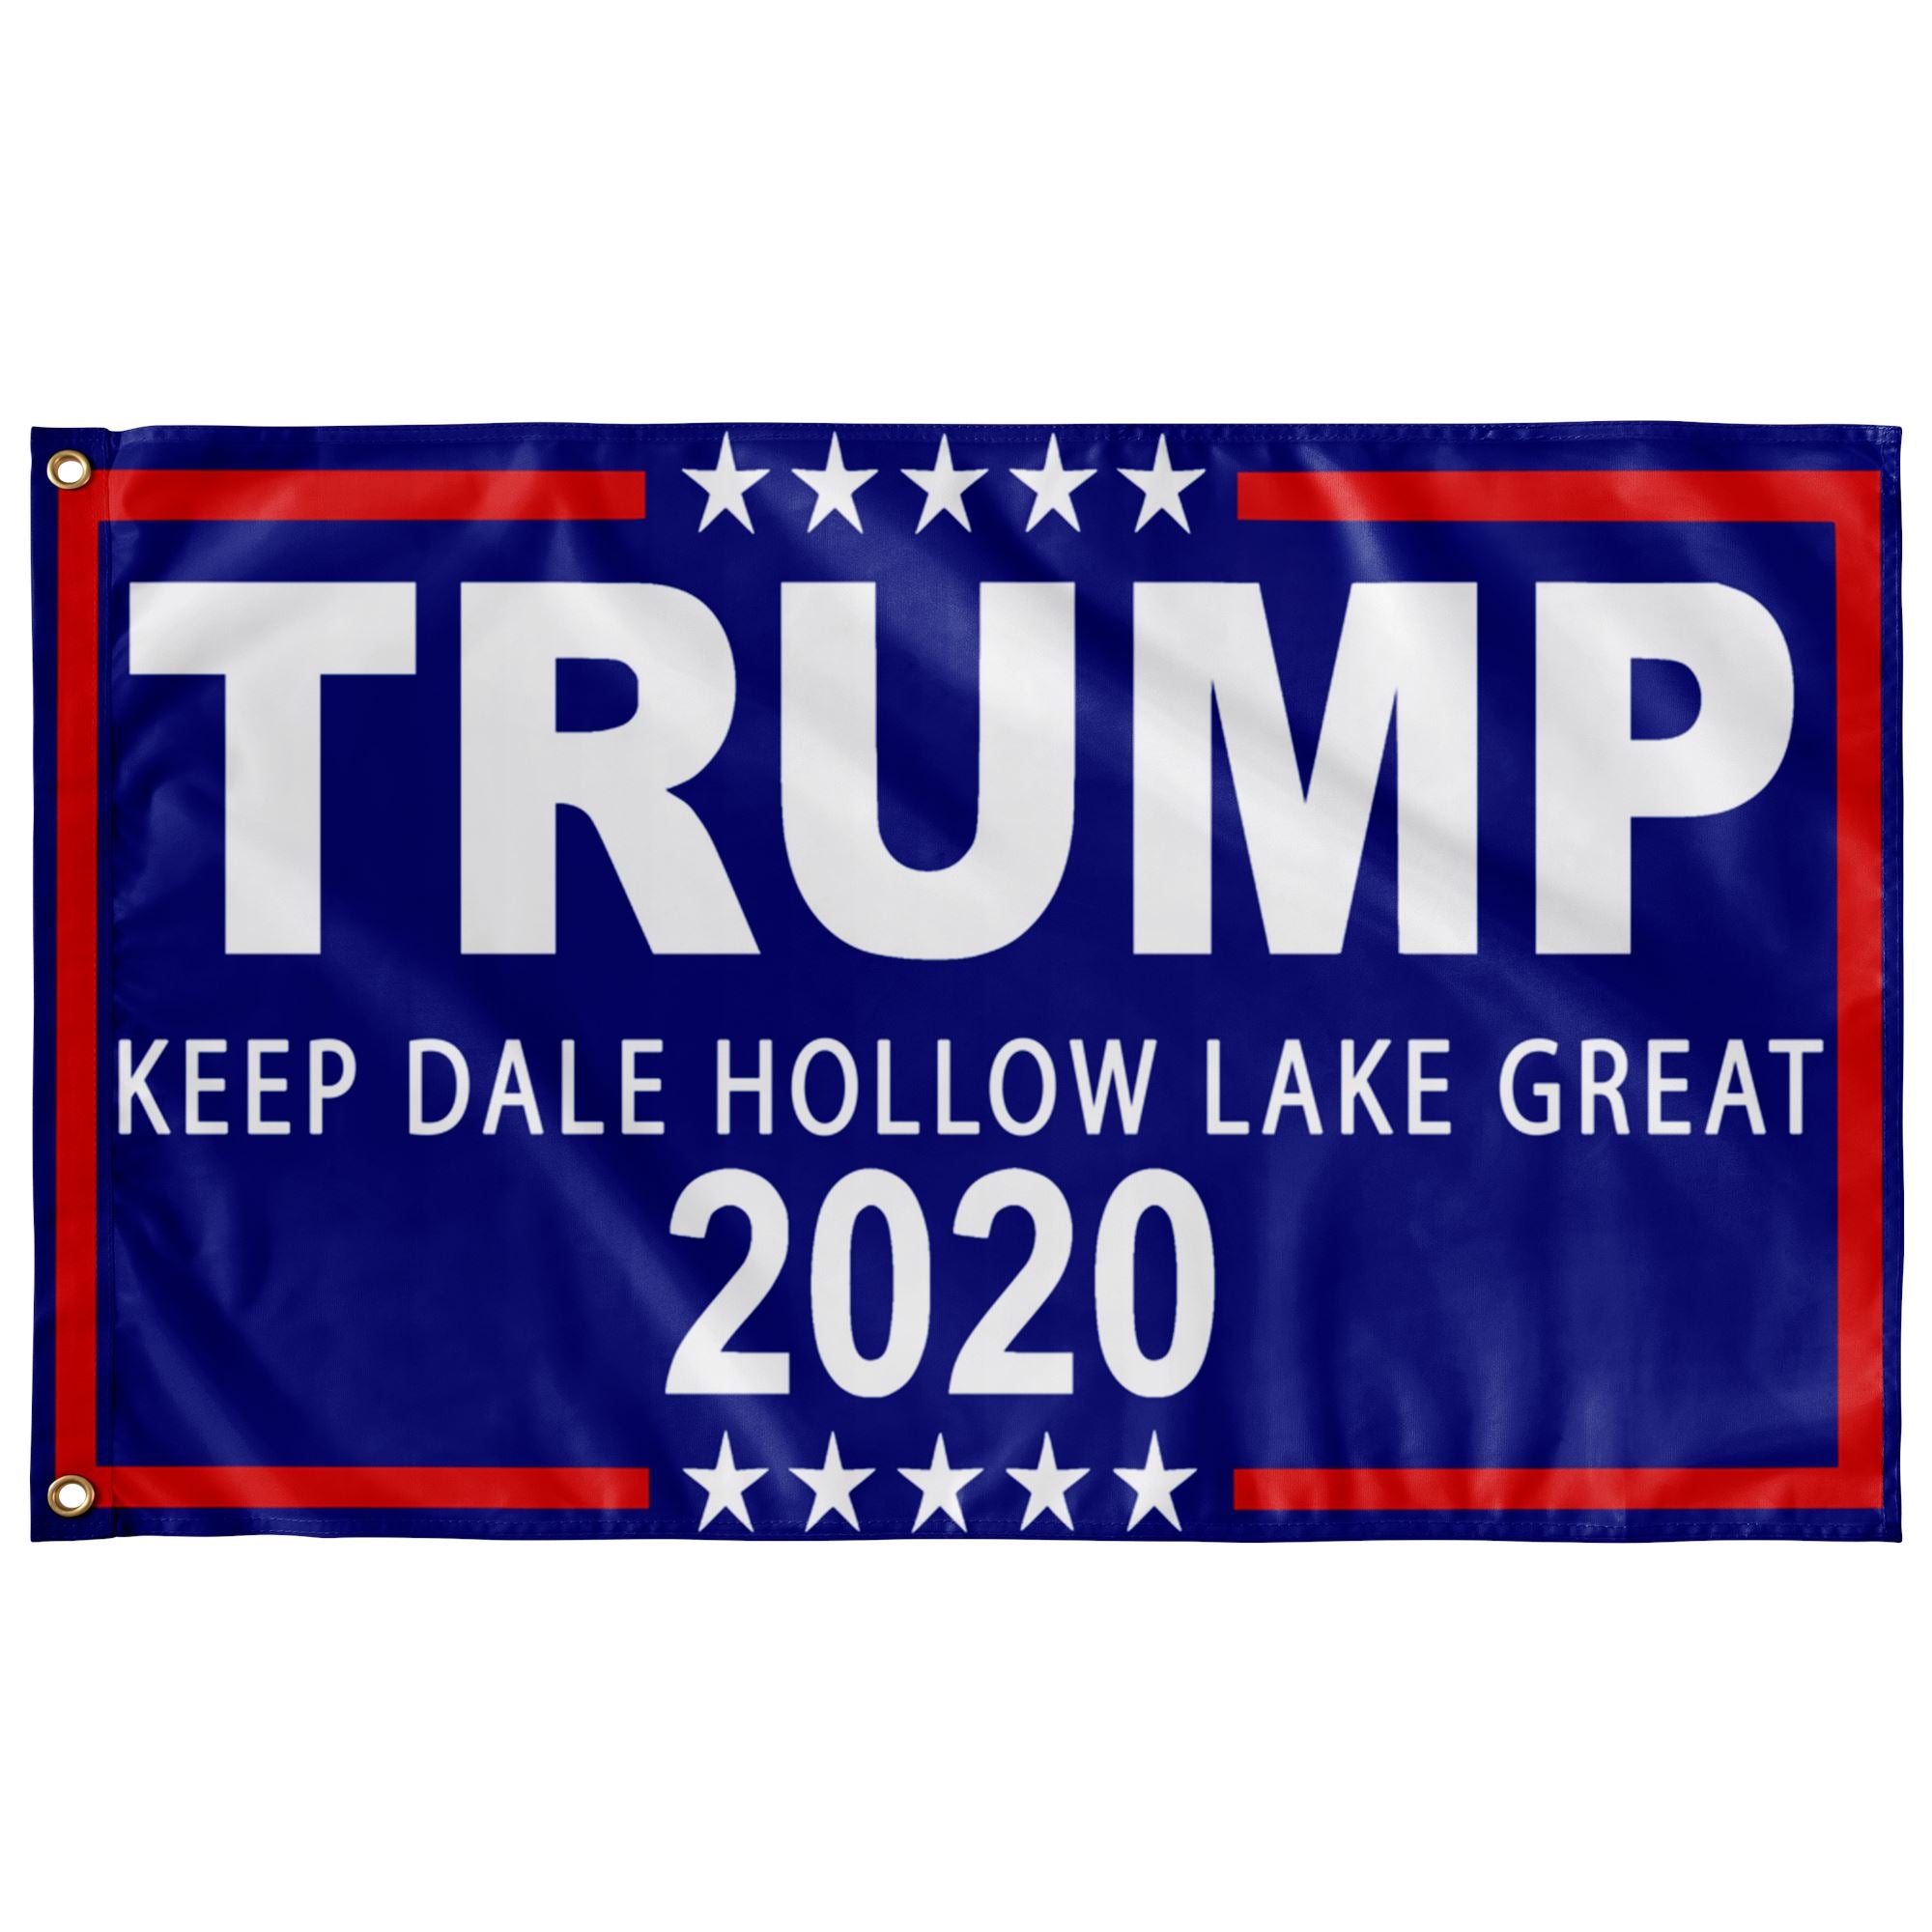 Trump Boat Flags - Keep Dale Hollow Lake Great - Houseboat Kings